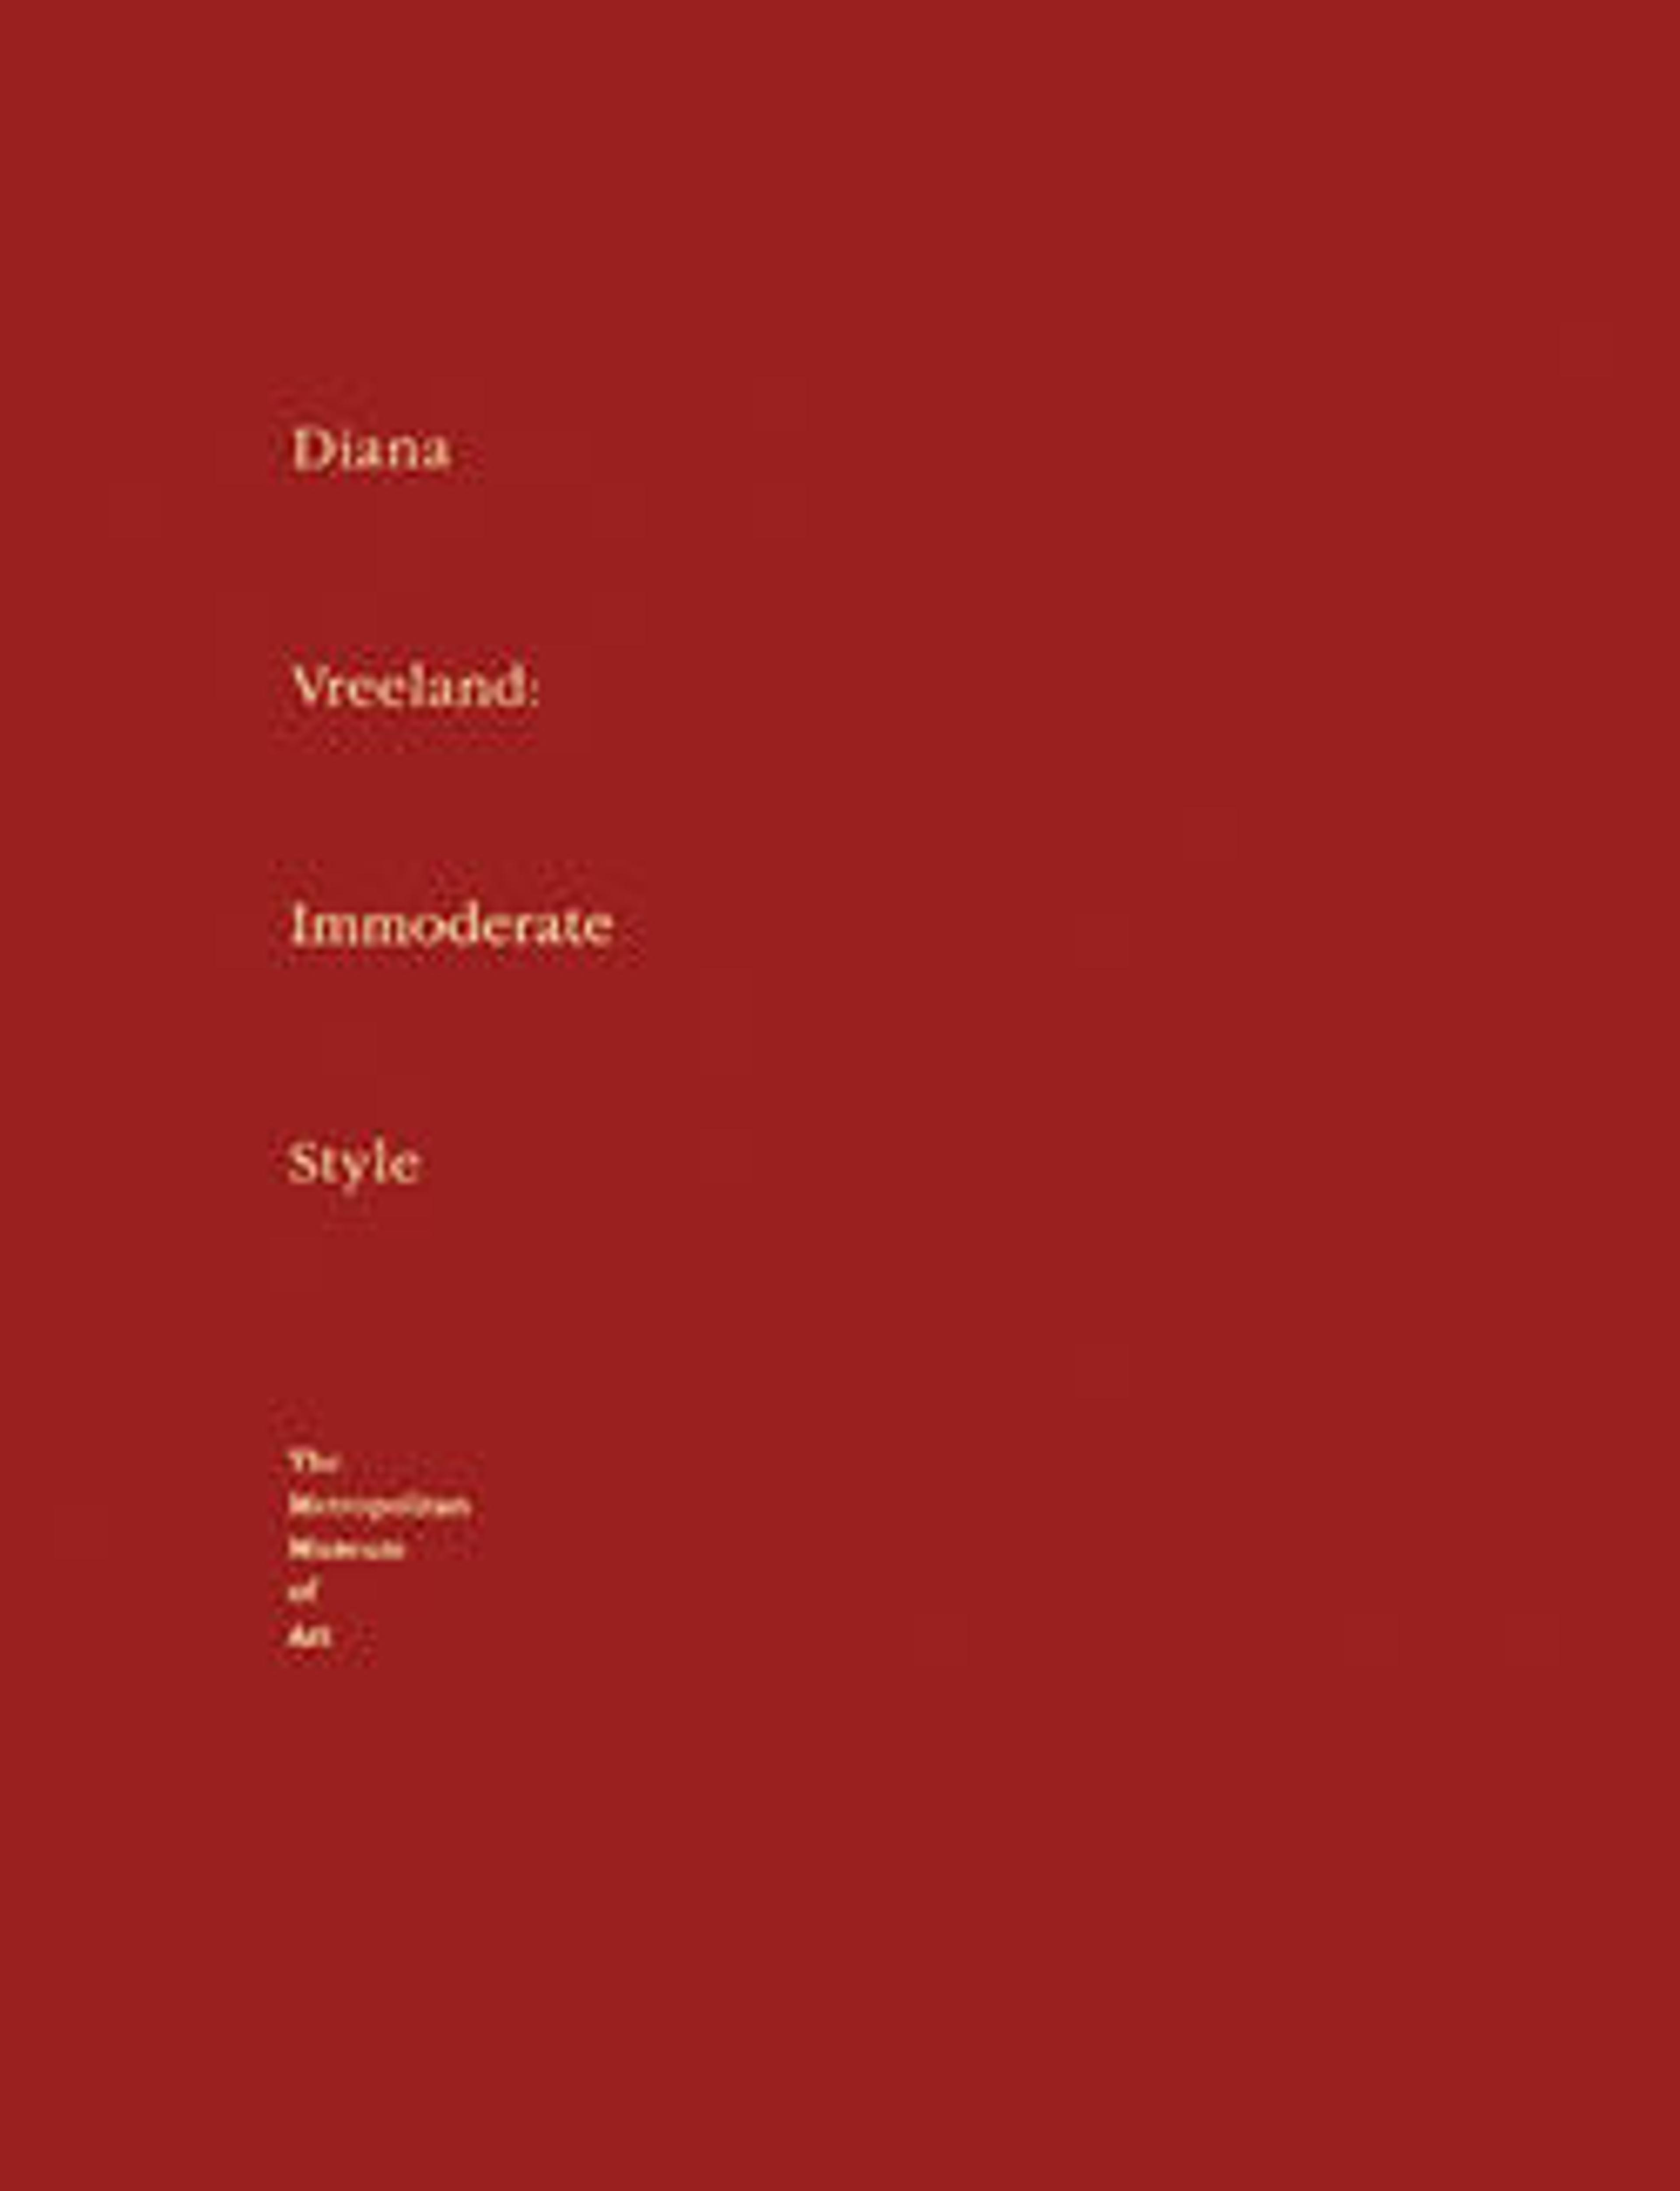 Diana Vreeland: Immoderate Style